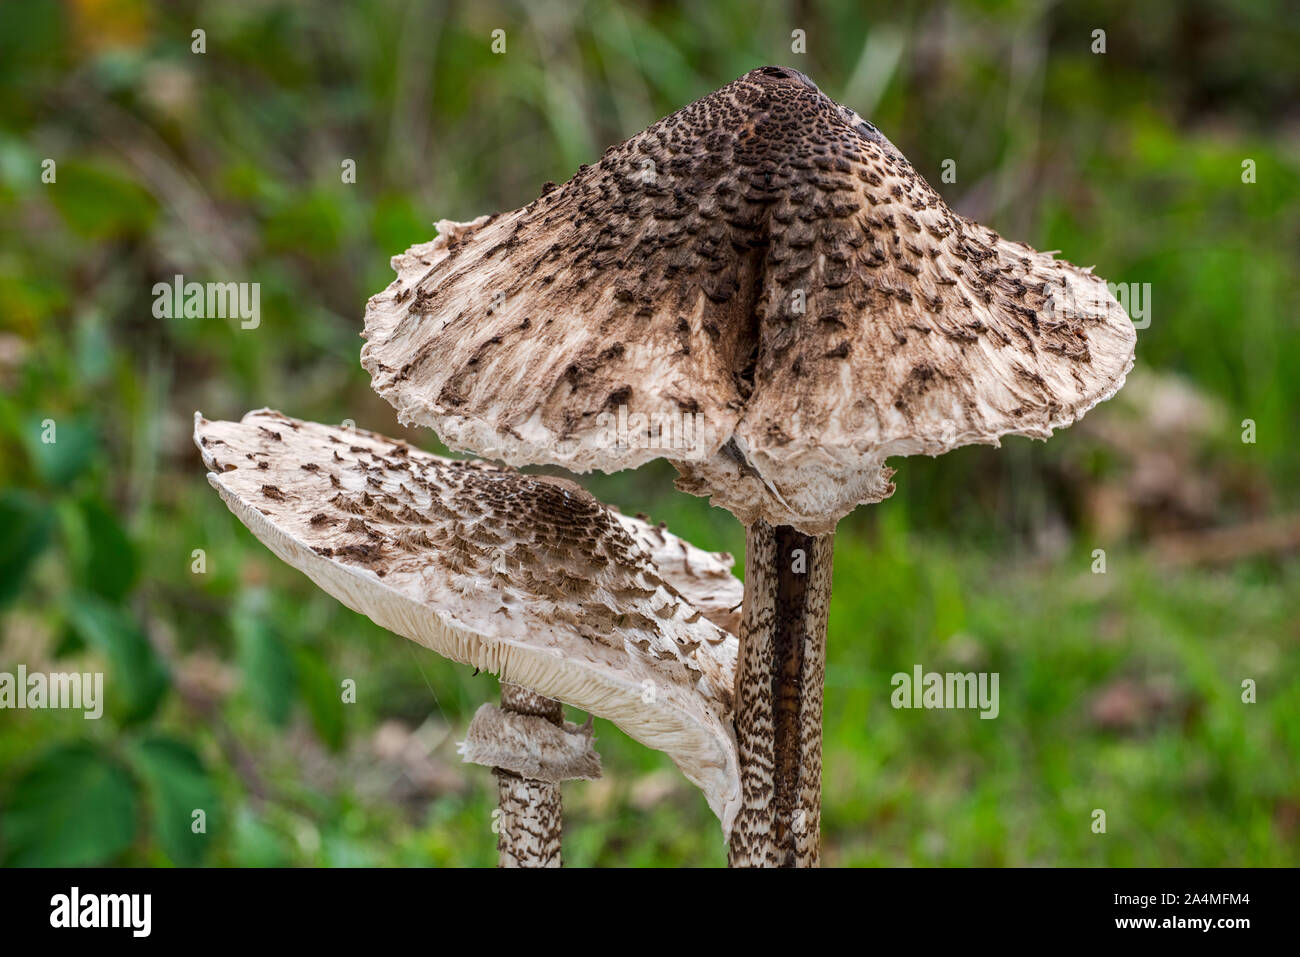 Deux champignons parasol (Macrolepiota procera) en automne / fall, close-up de bouchons Banque D'Images